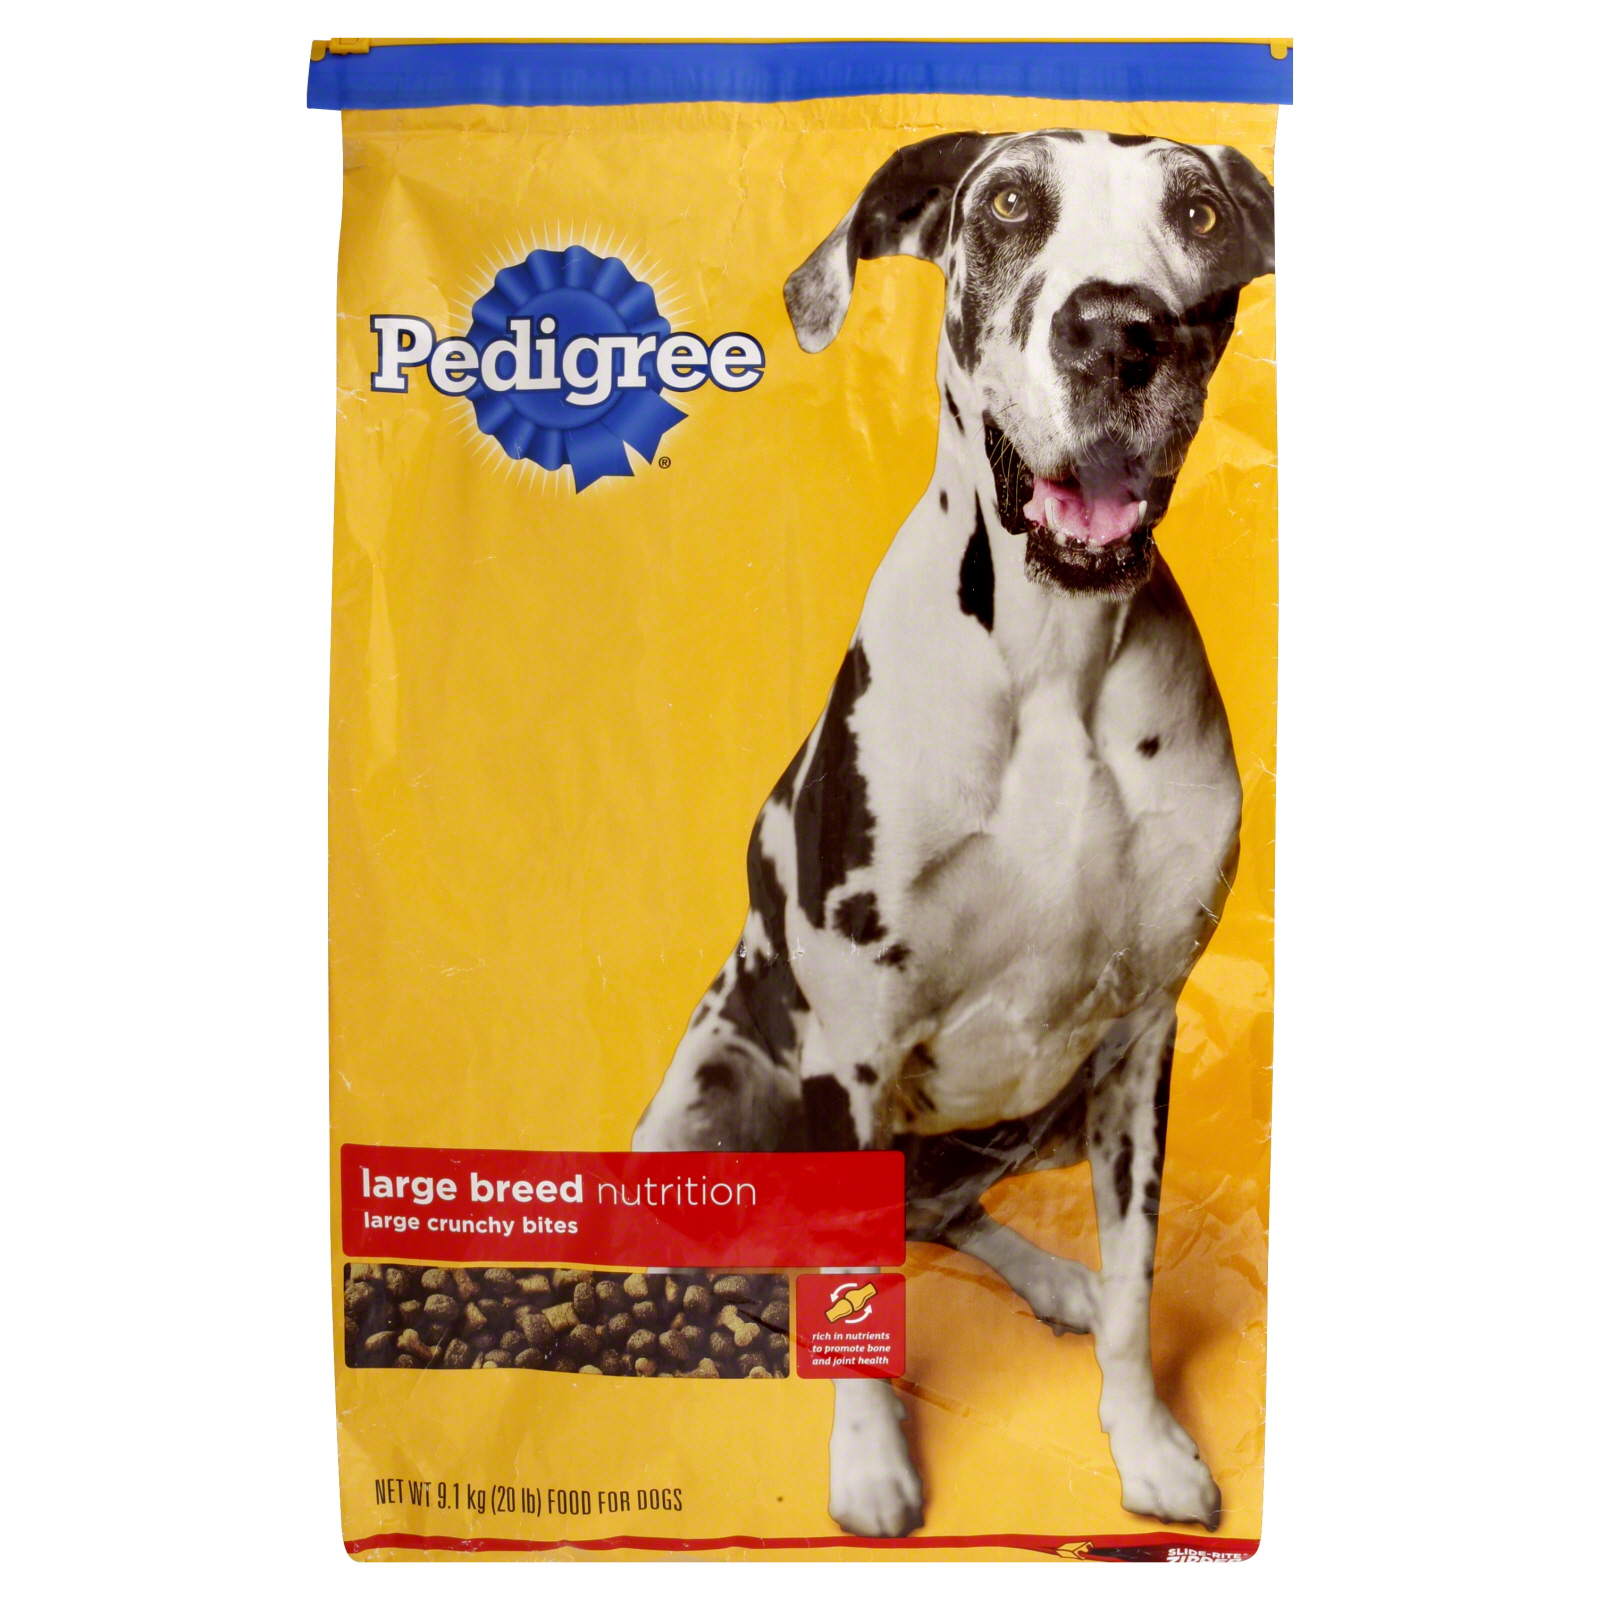 Pedigree Food for Dogs, Large Breed Nutrition, 20 lb (9.1 kg)